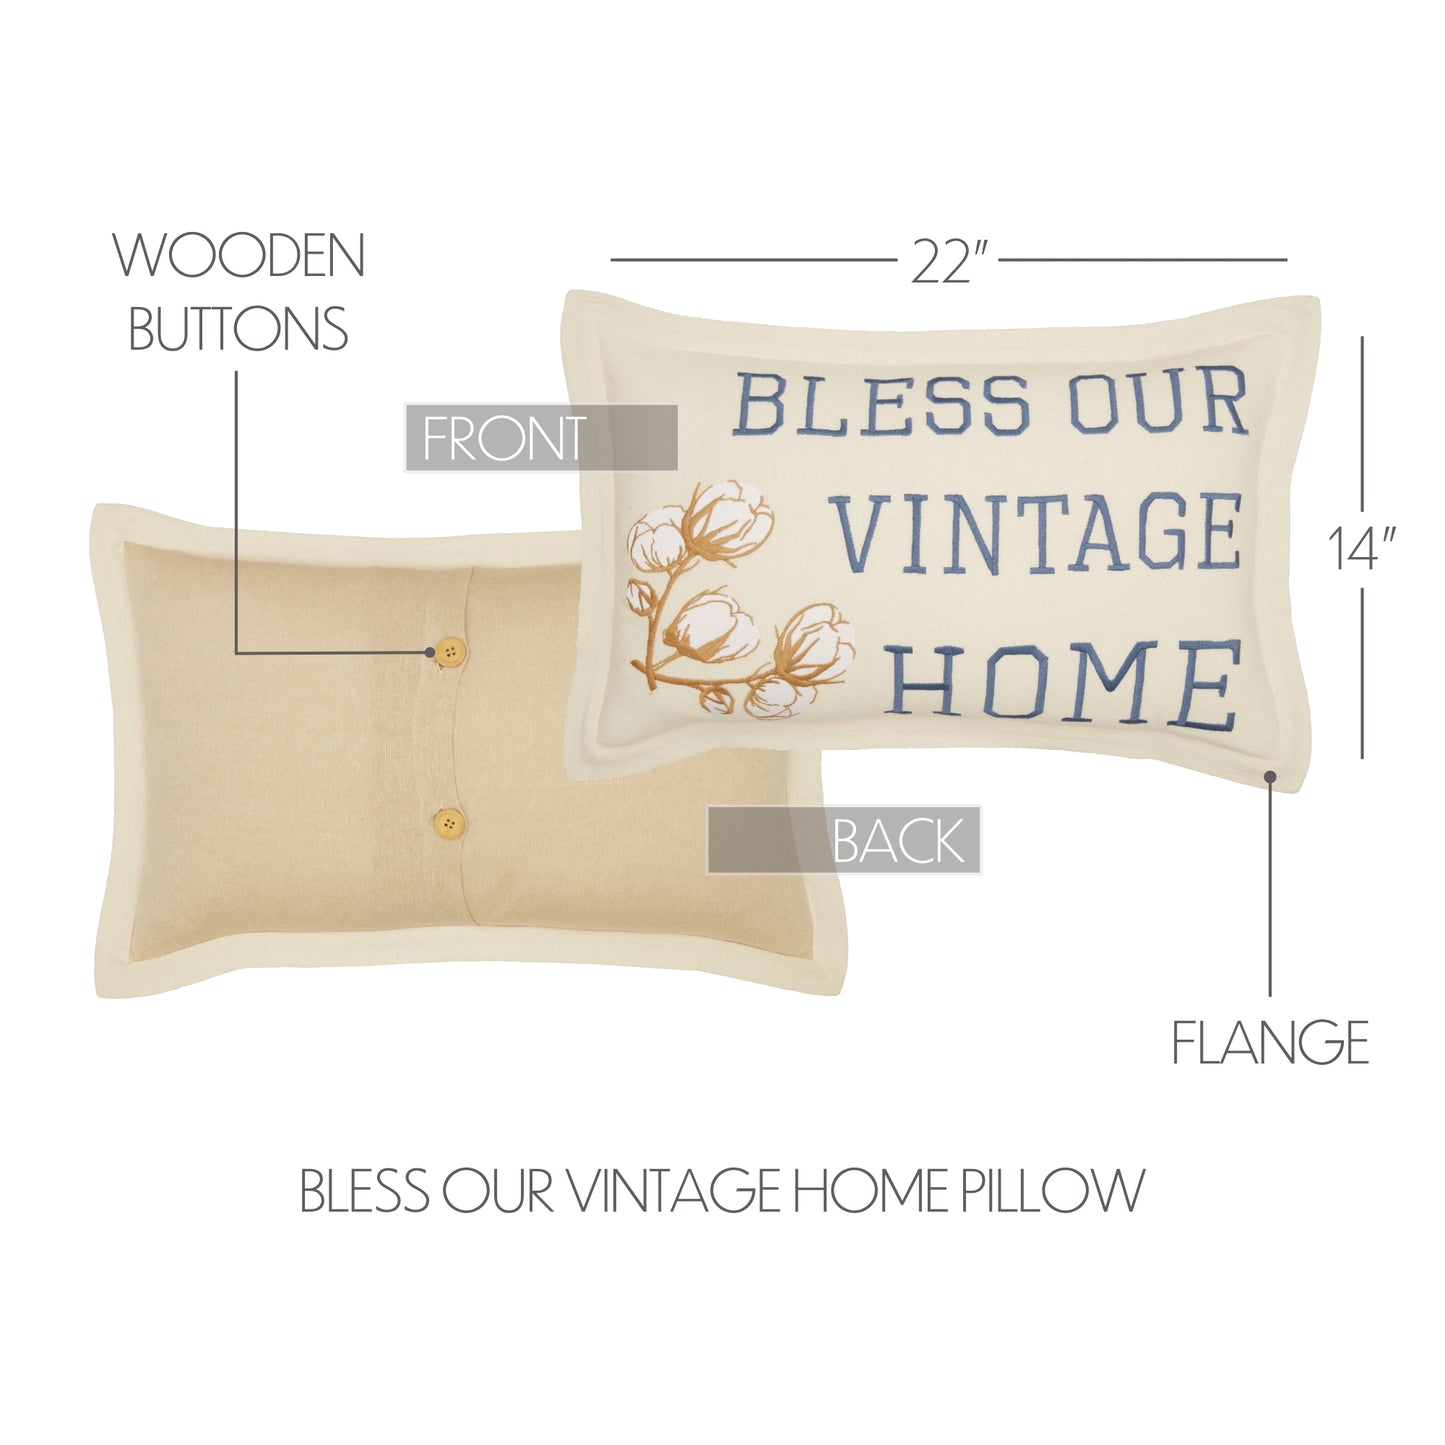 65273-Ashmont-Bless-Our-Vintage-Home-Pillow-14x22-image-1